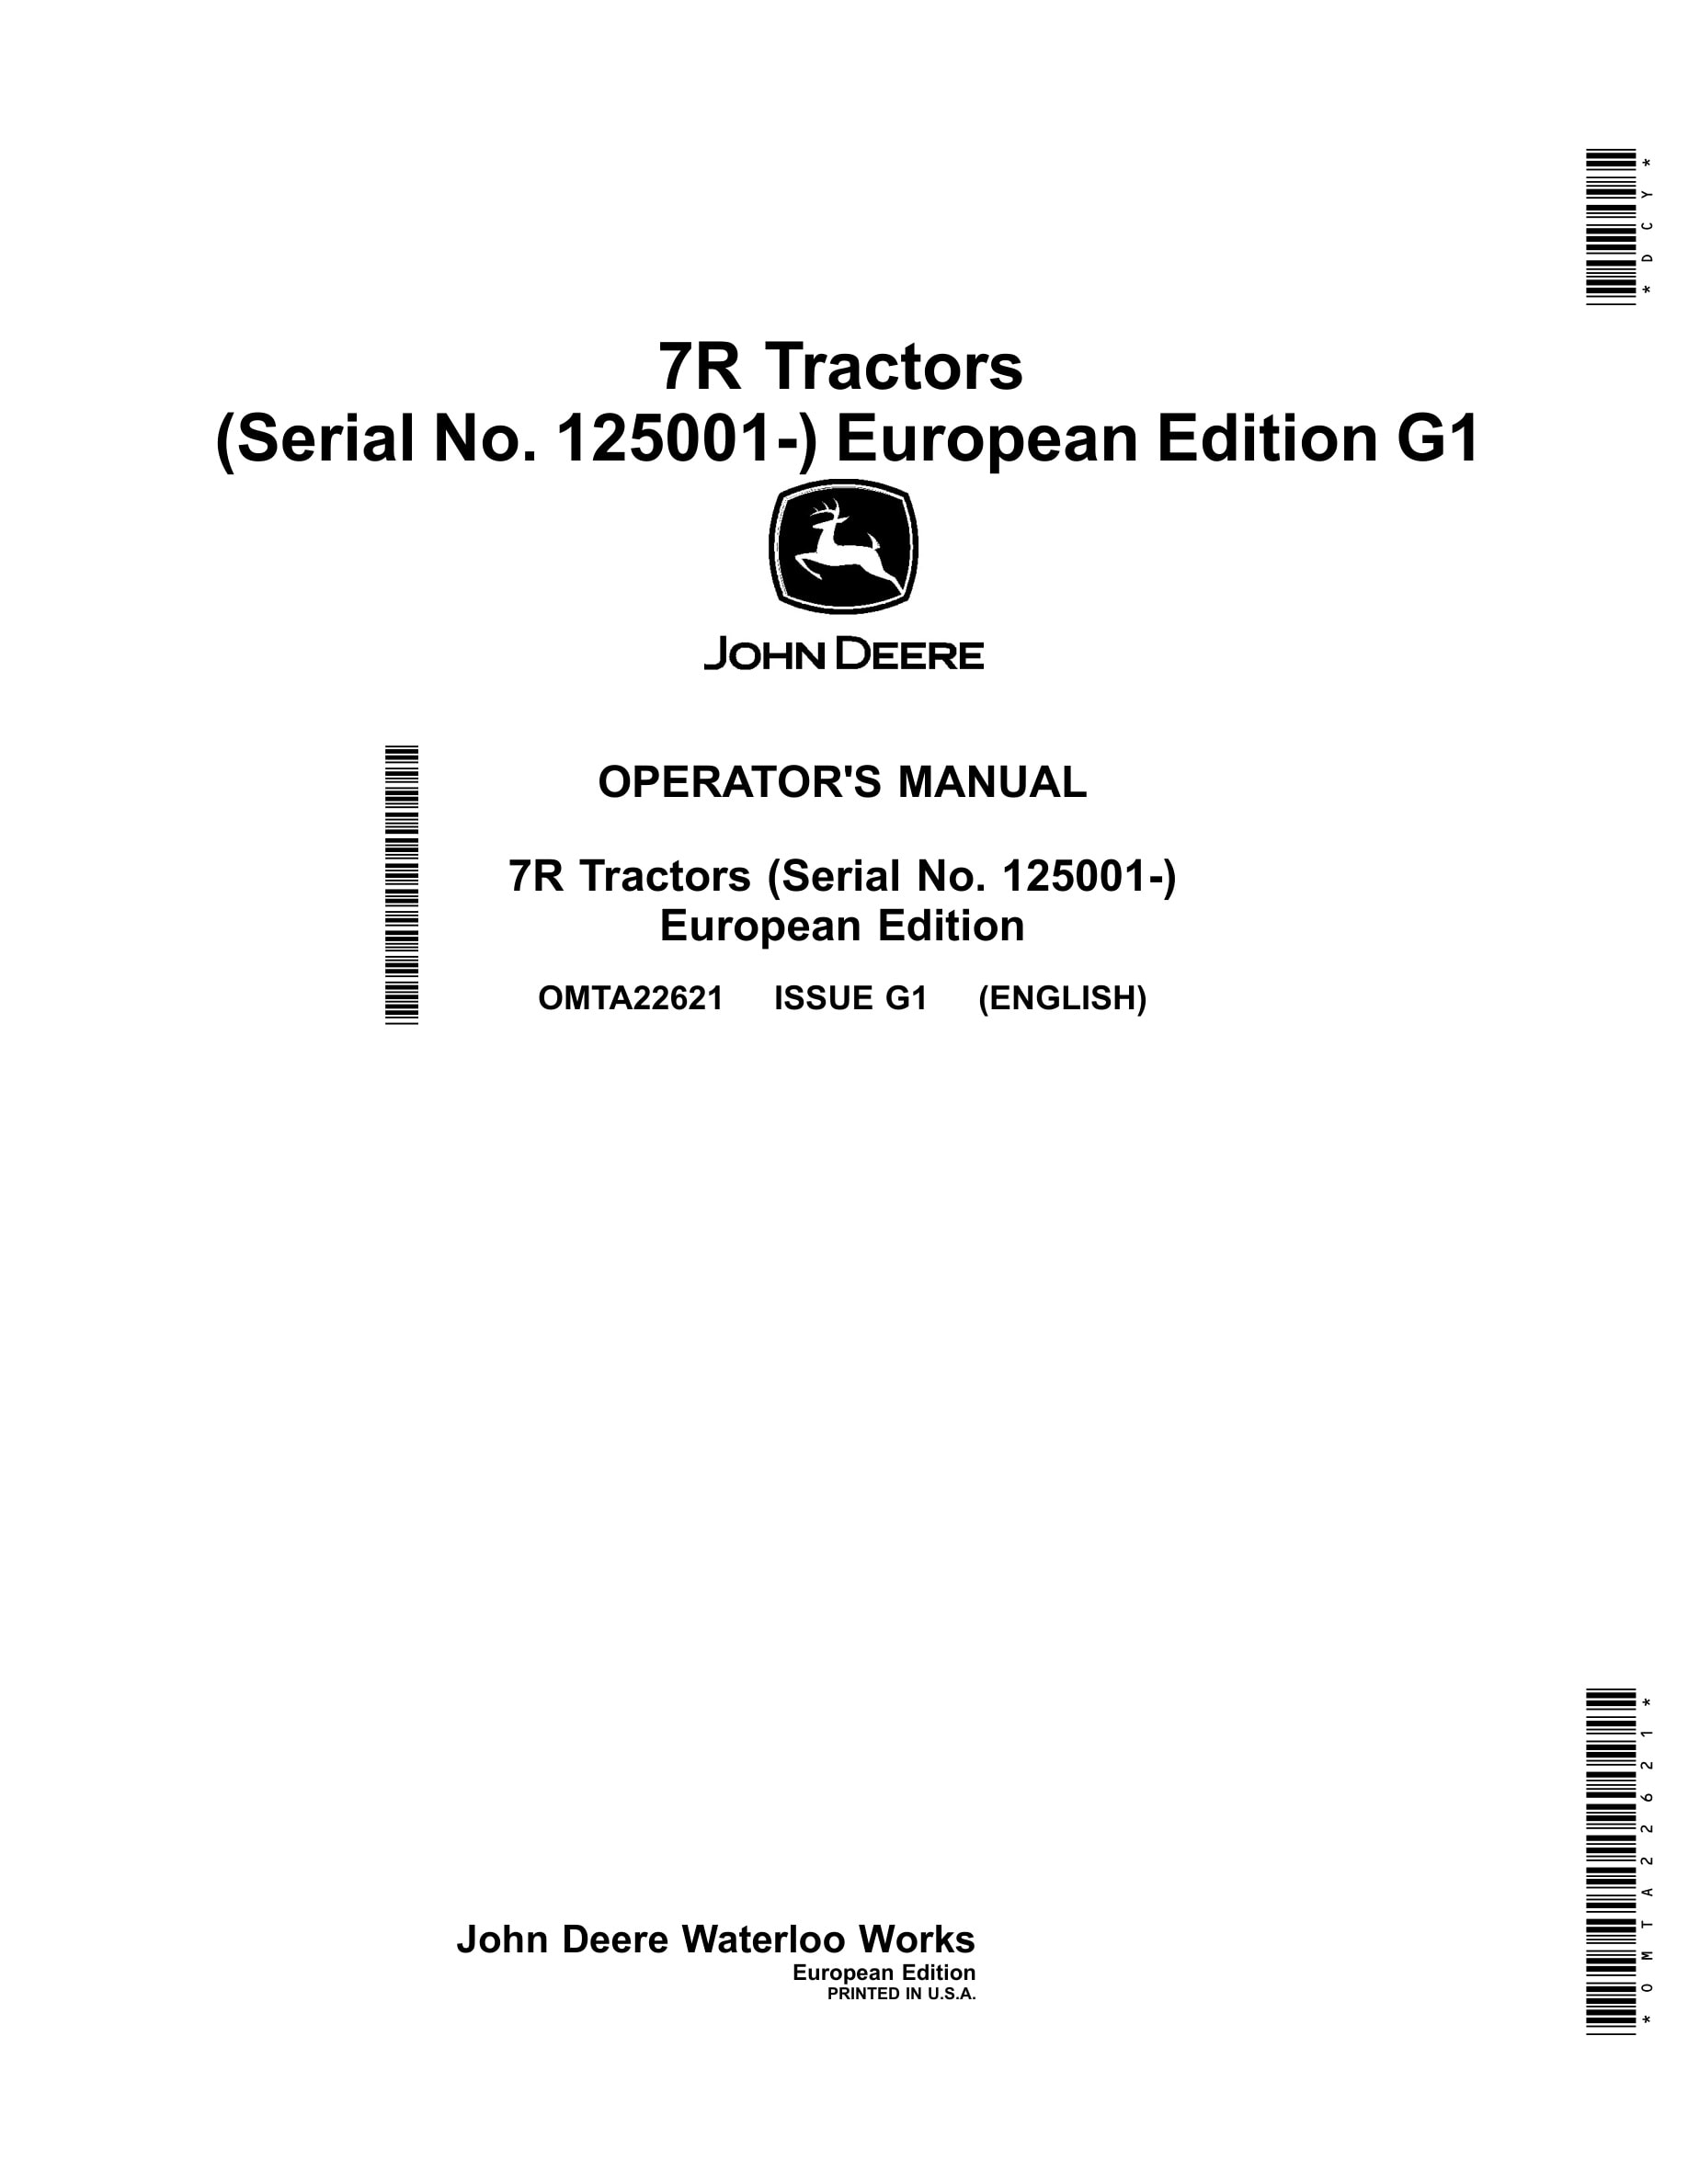 John Deere 7r Tractors Operator Manuals OMTA22621-1